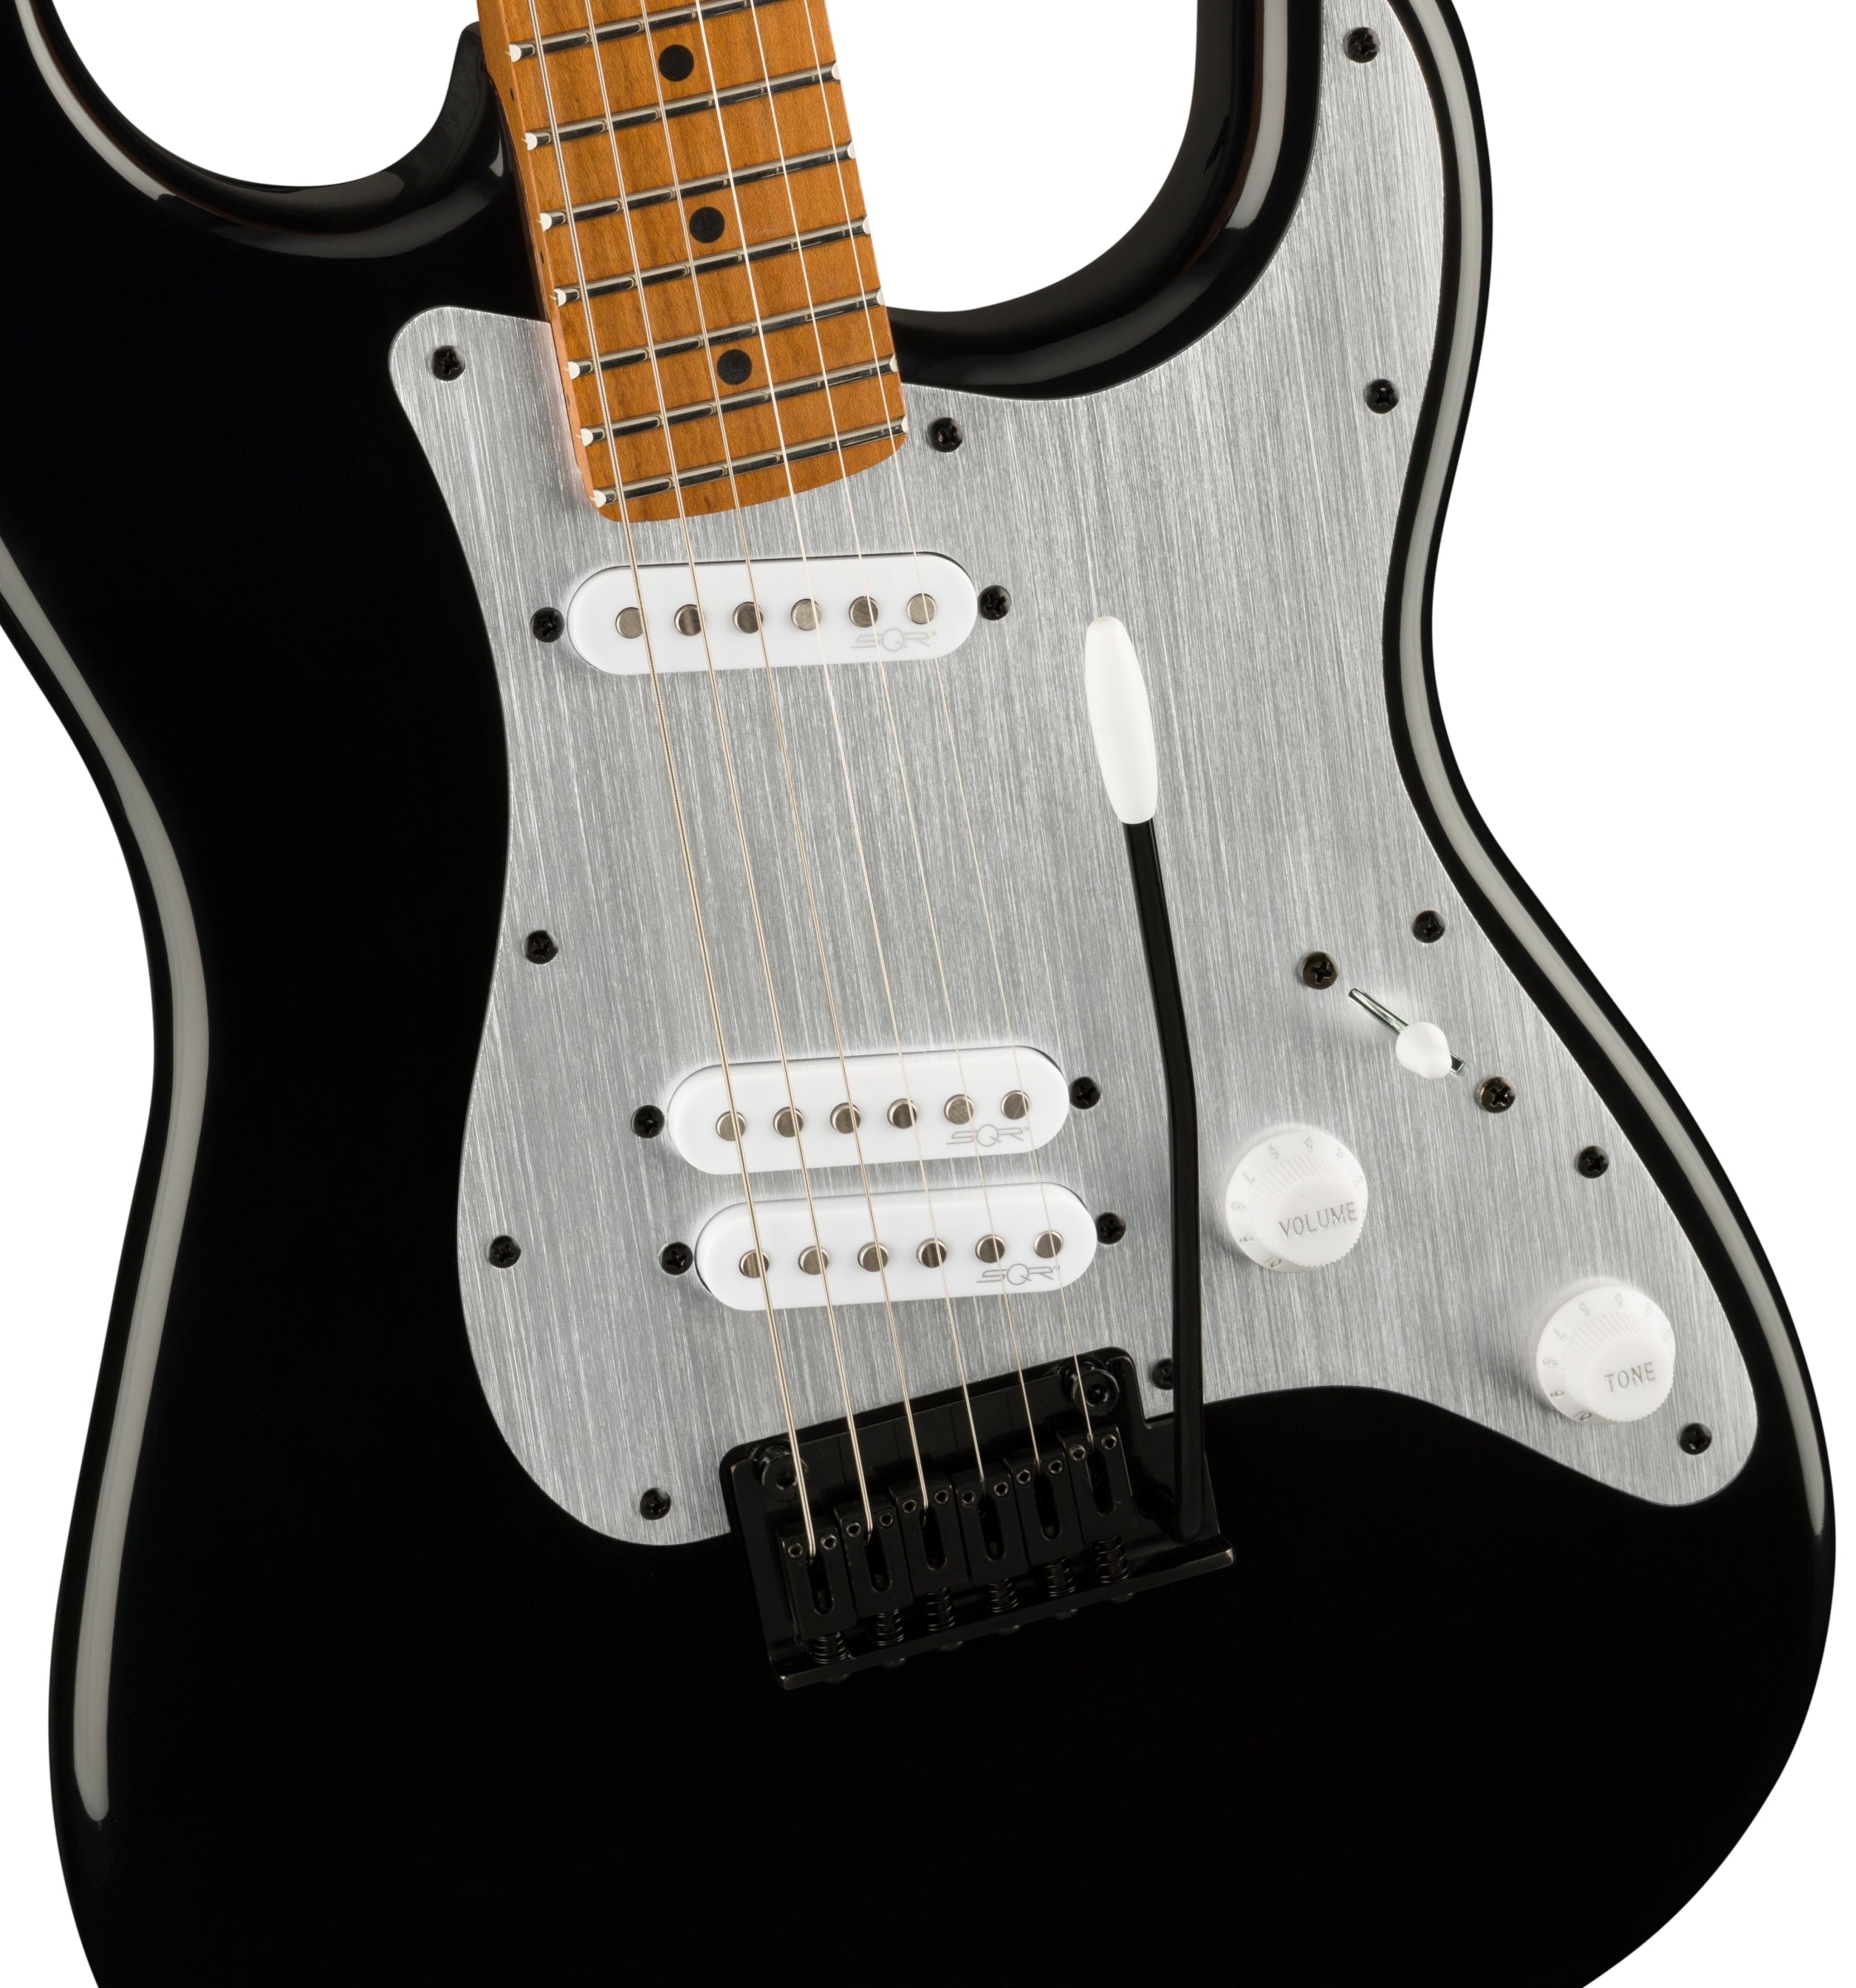 Squier Contemporary Stratocaster Special Electric Guitar - Black